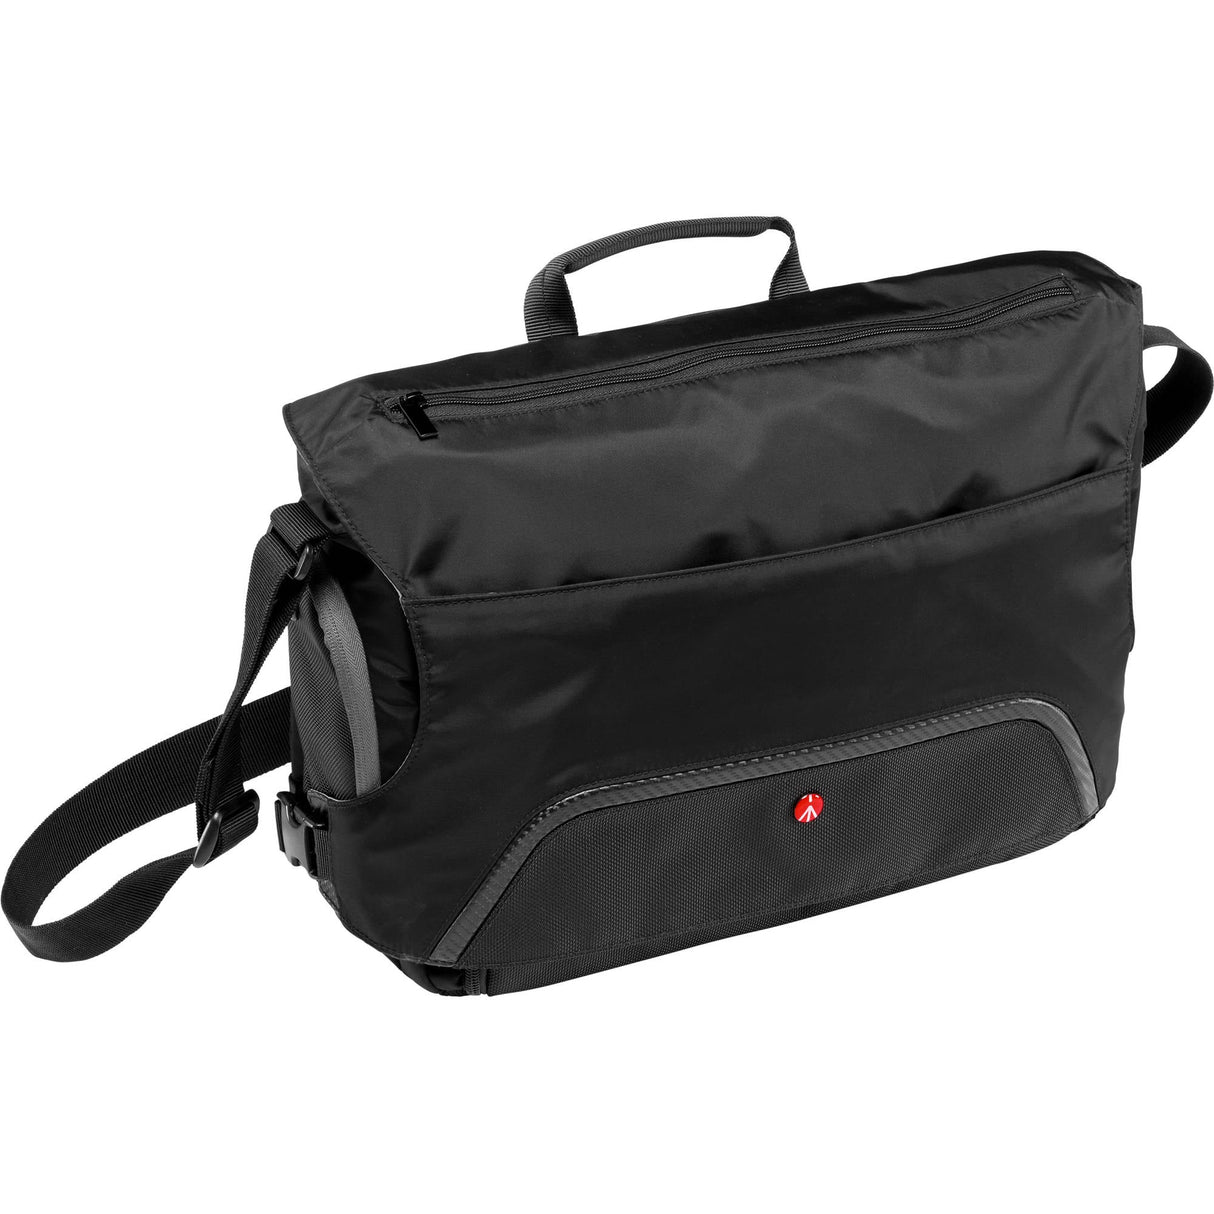 Manfrotto Large Advanced Befree Messenger Bag Black